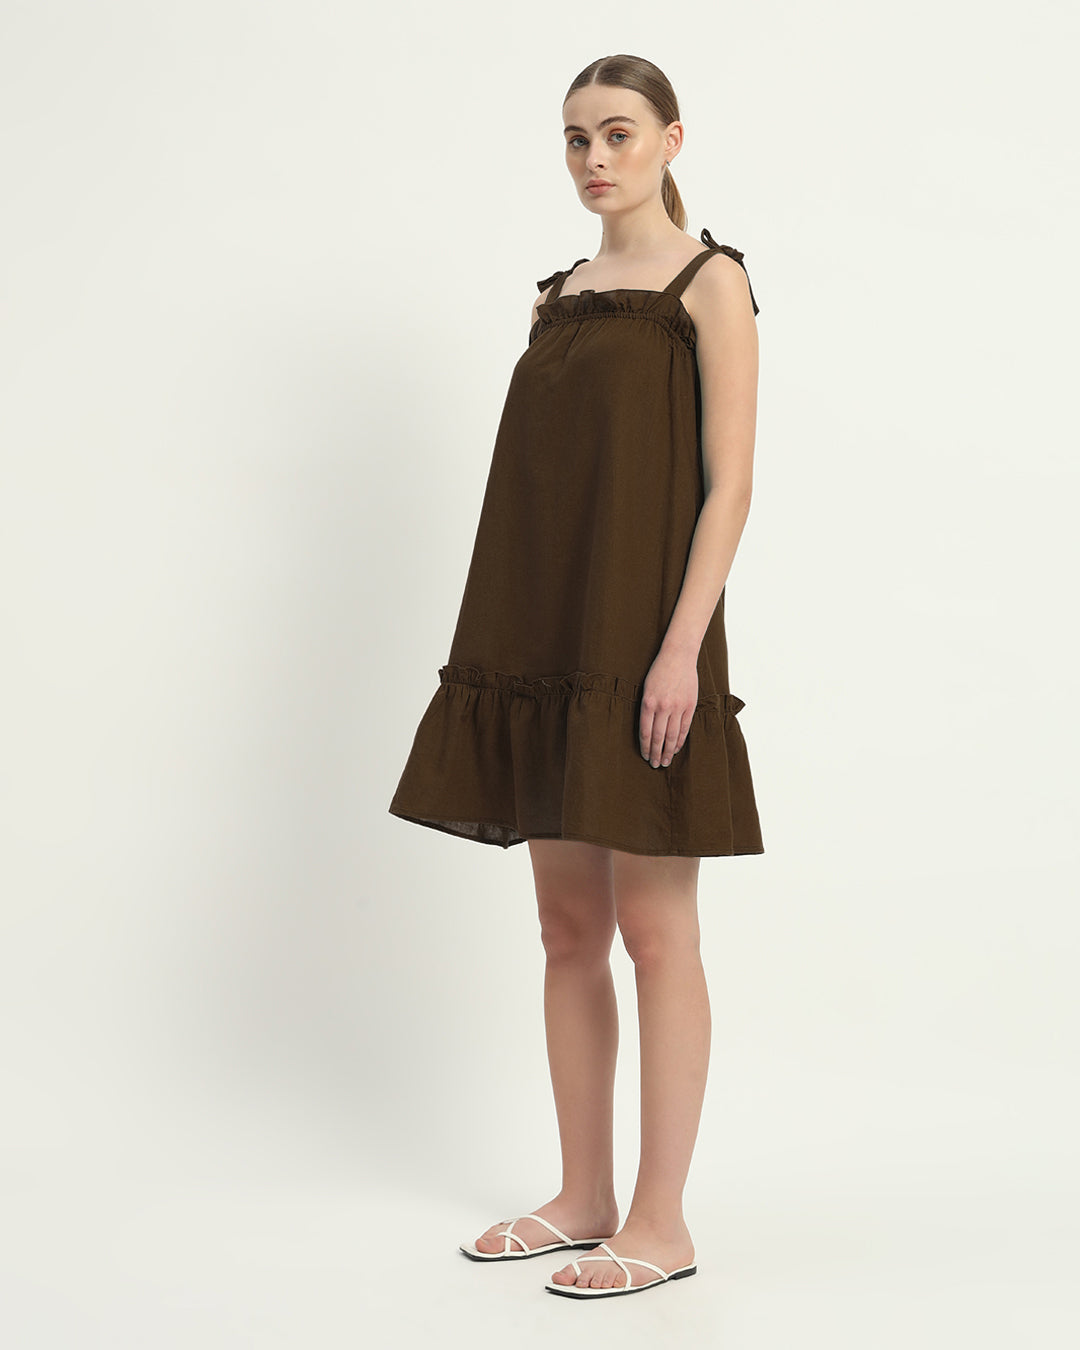 The Nutshell Amalfi Cotton Dress